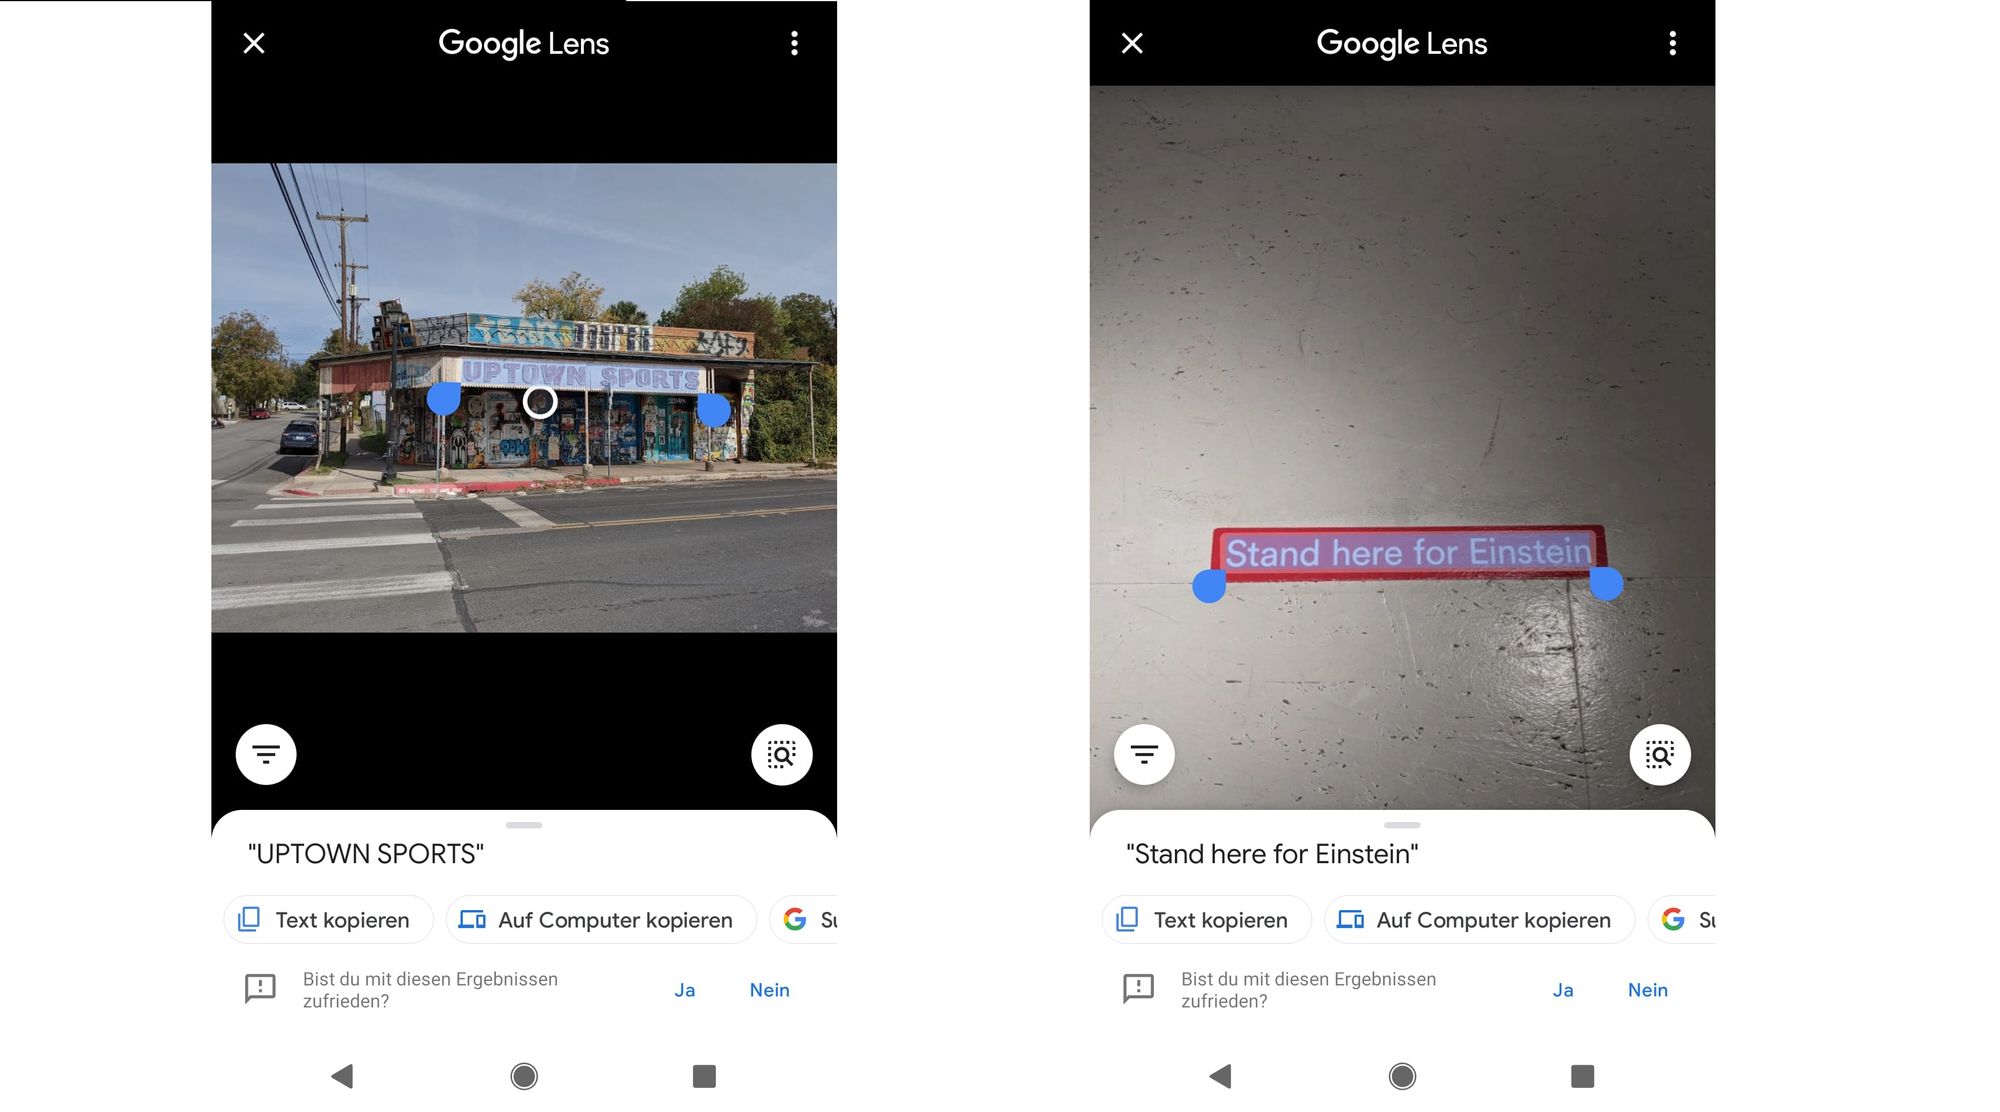 Google-Lens-Funktionen in Photos-App verfügbar